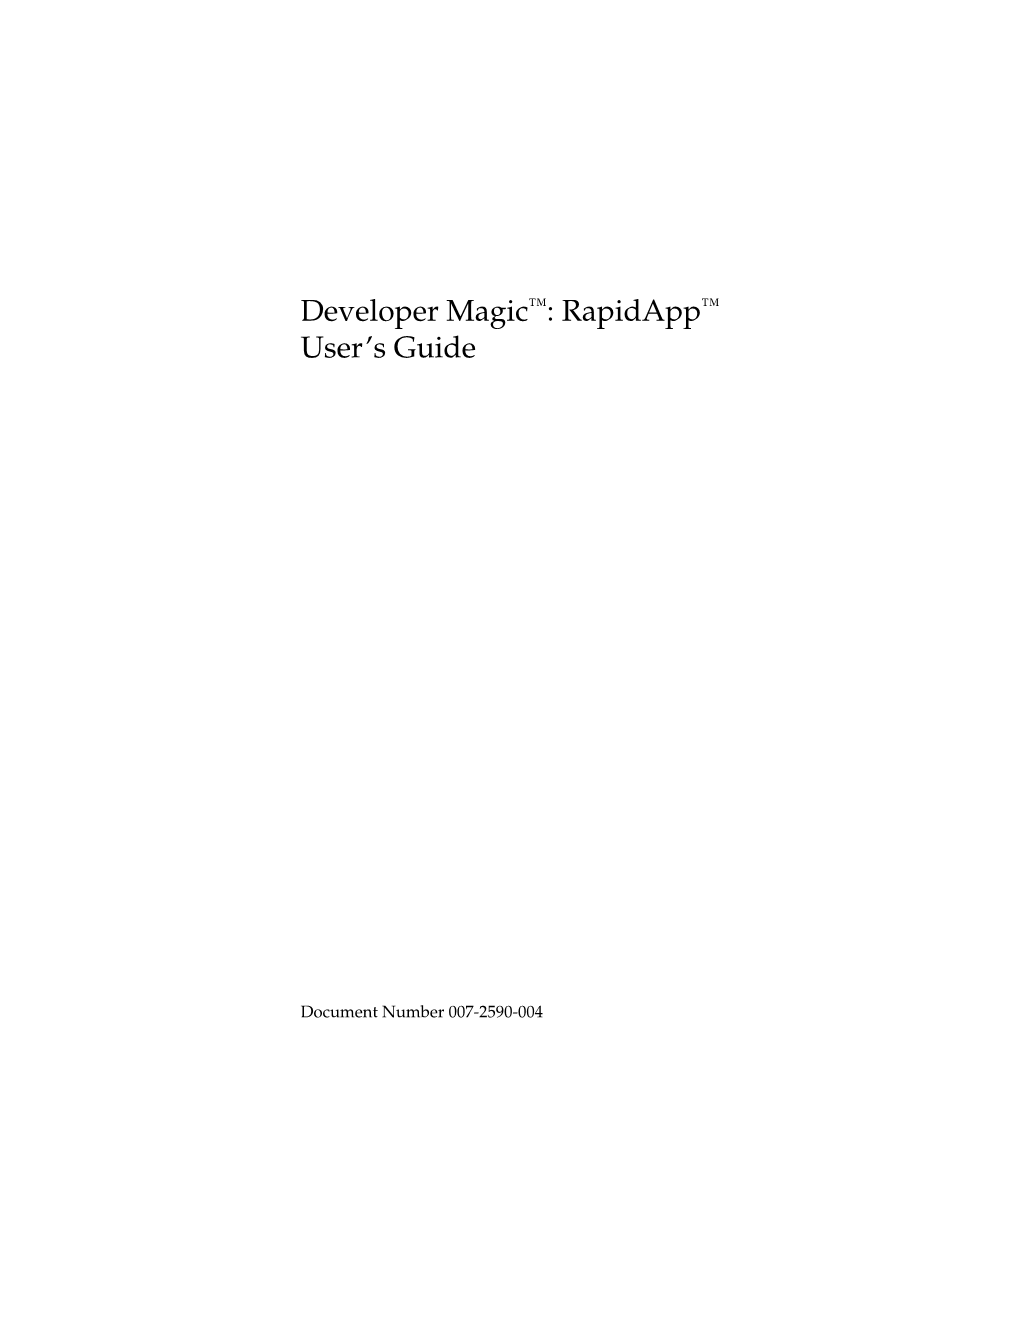 Developer Magic™: Rapidapp™ User's Guide